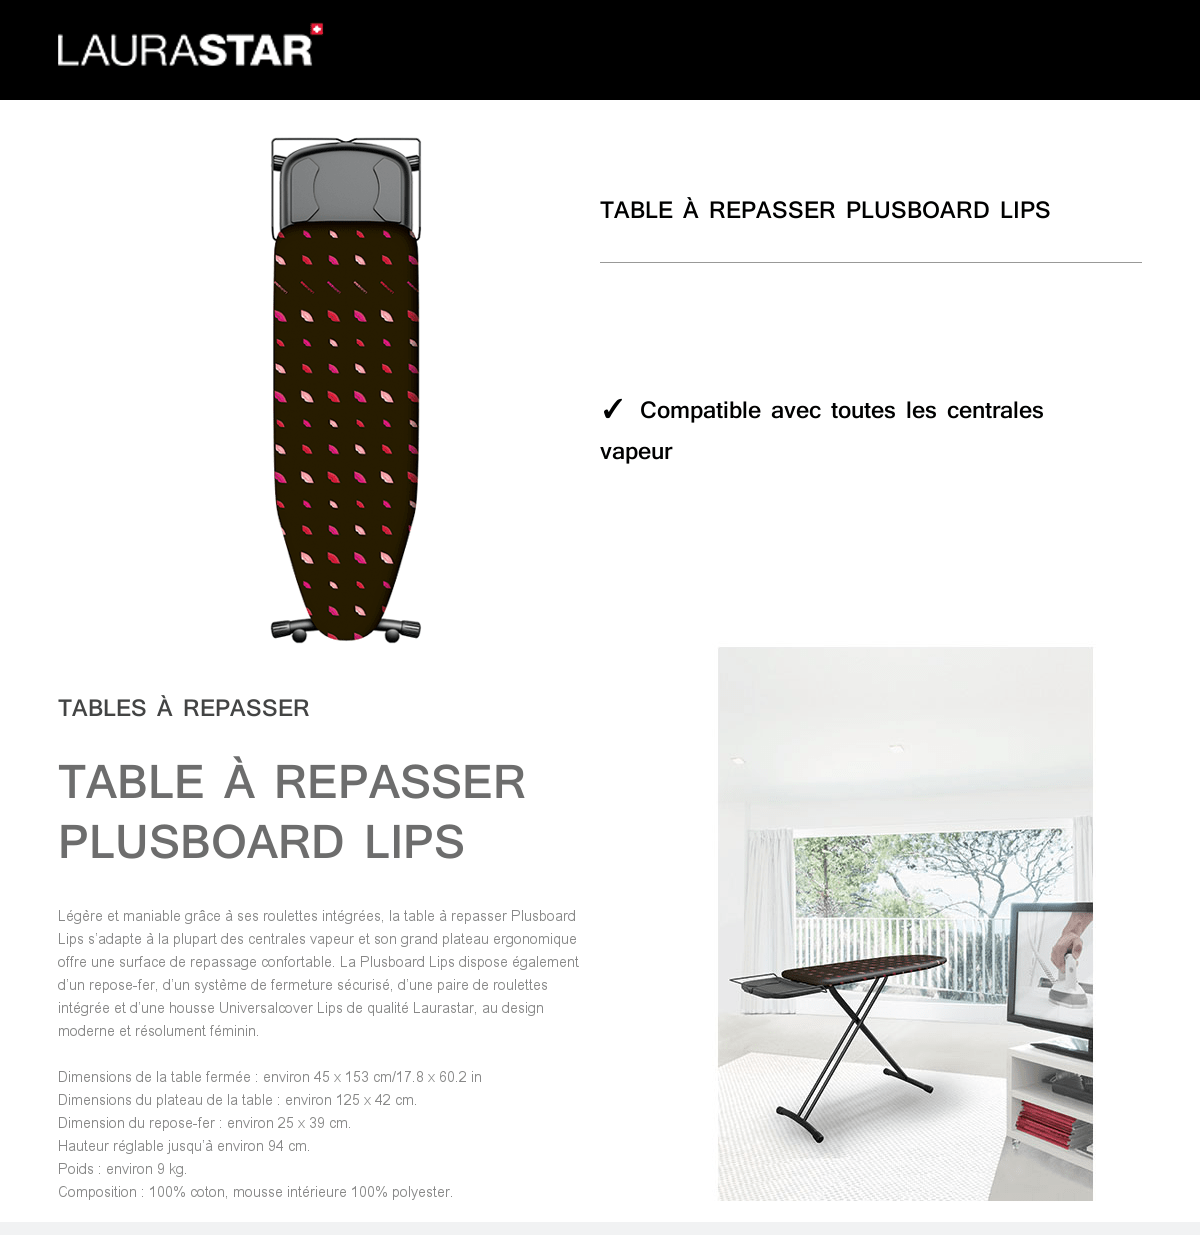 laurastar table a repasser plusboard lips